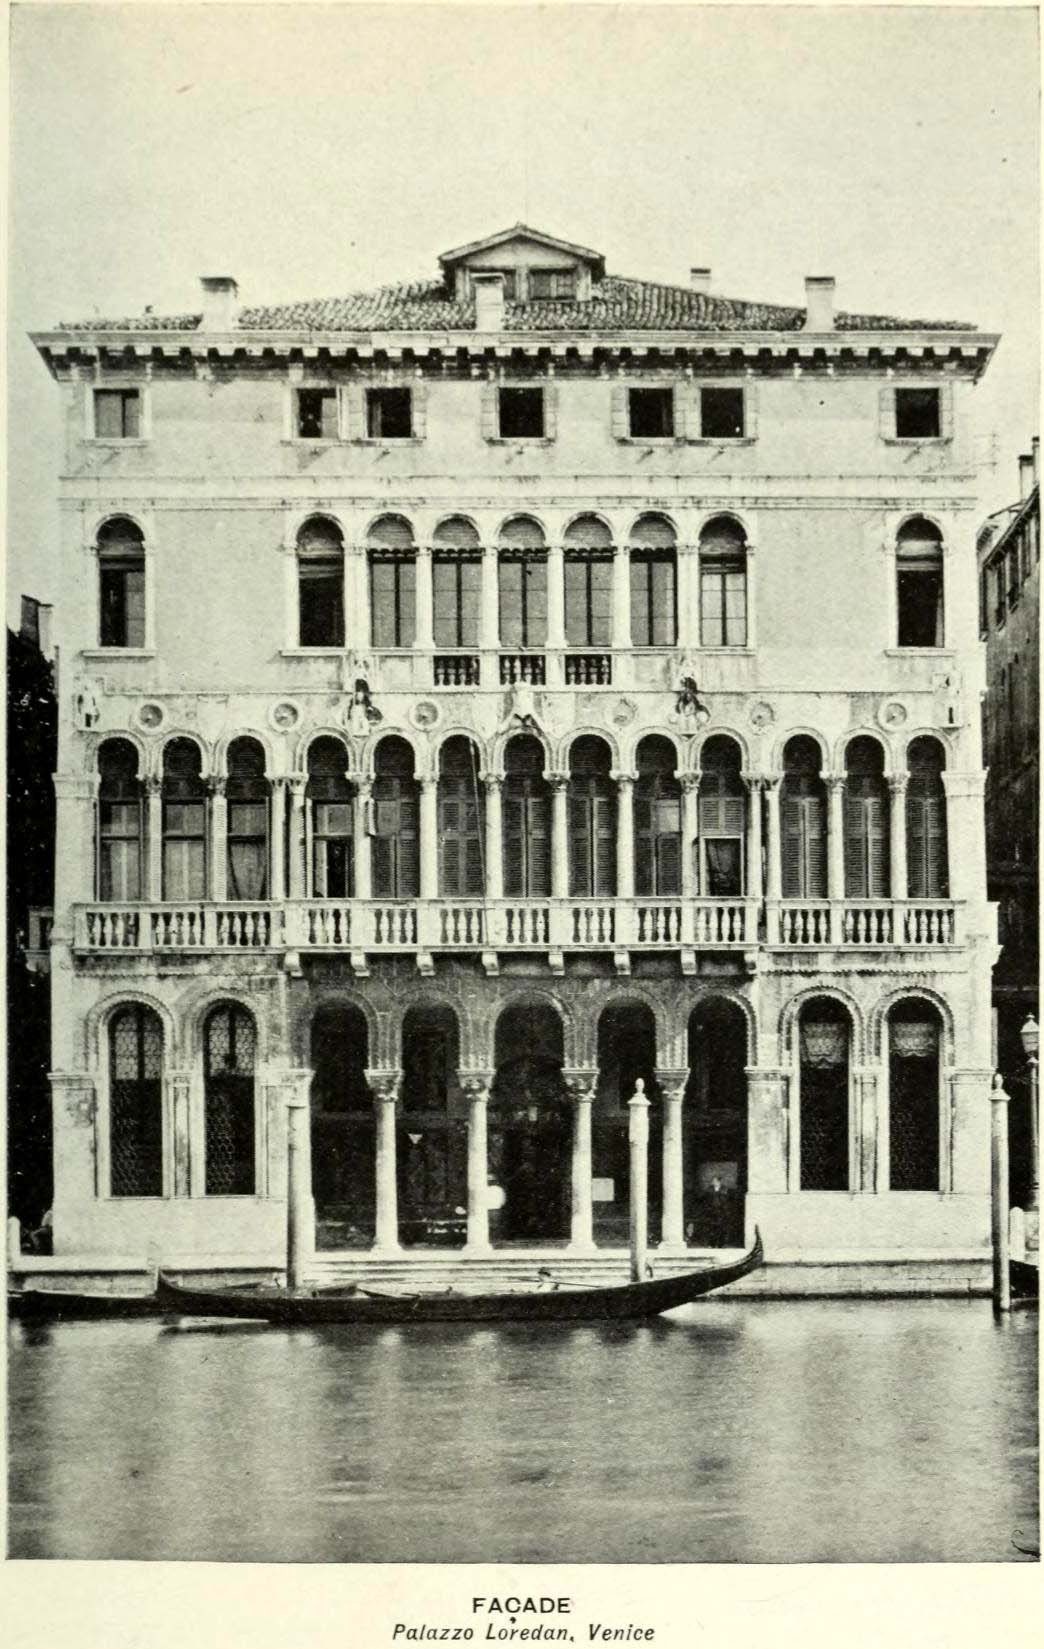 The Palazzo Loredan, Venice